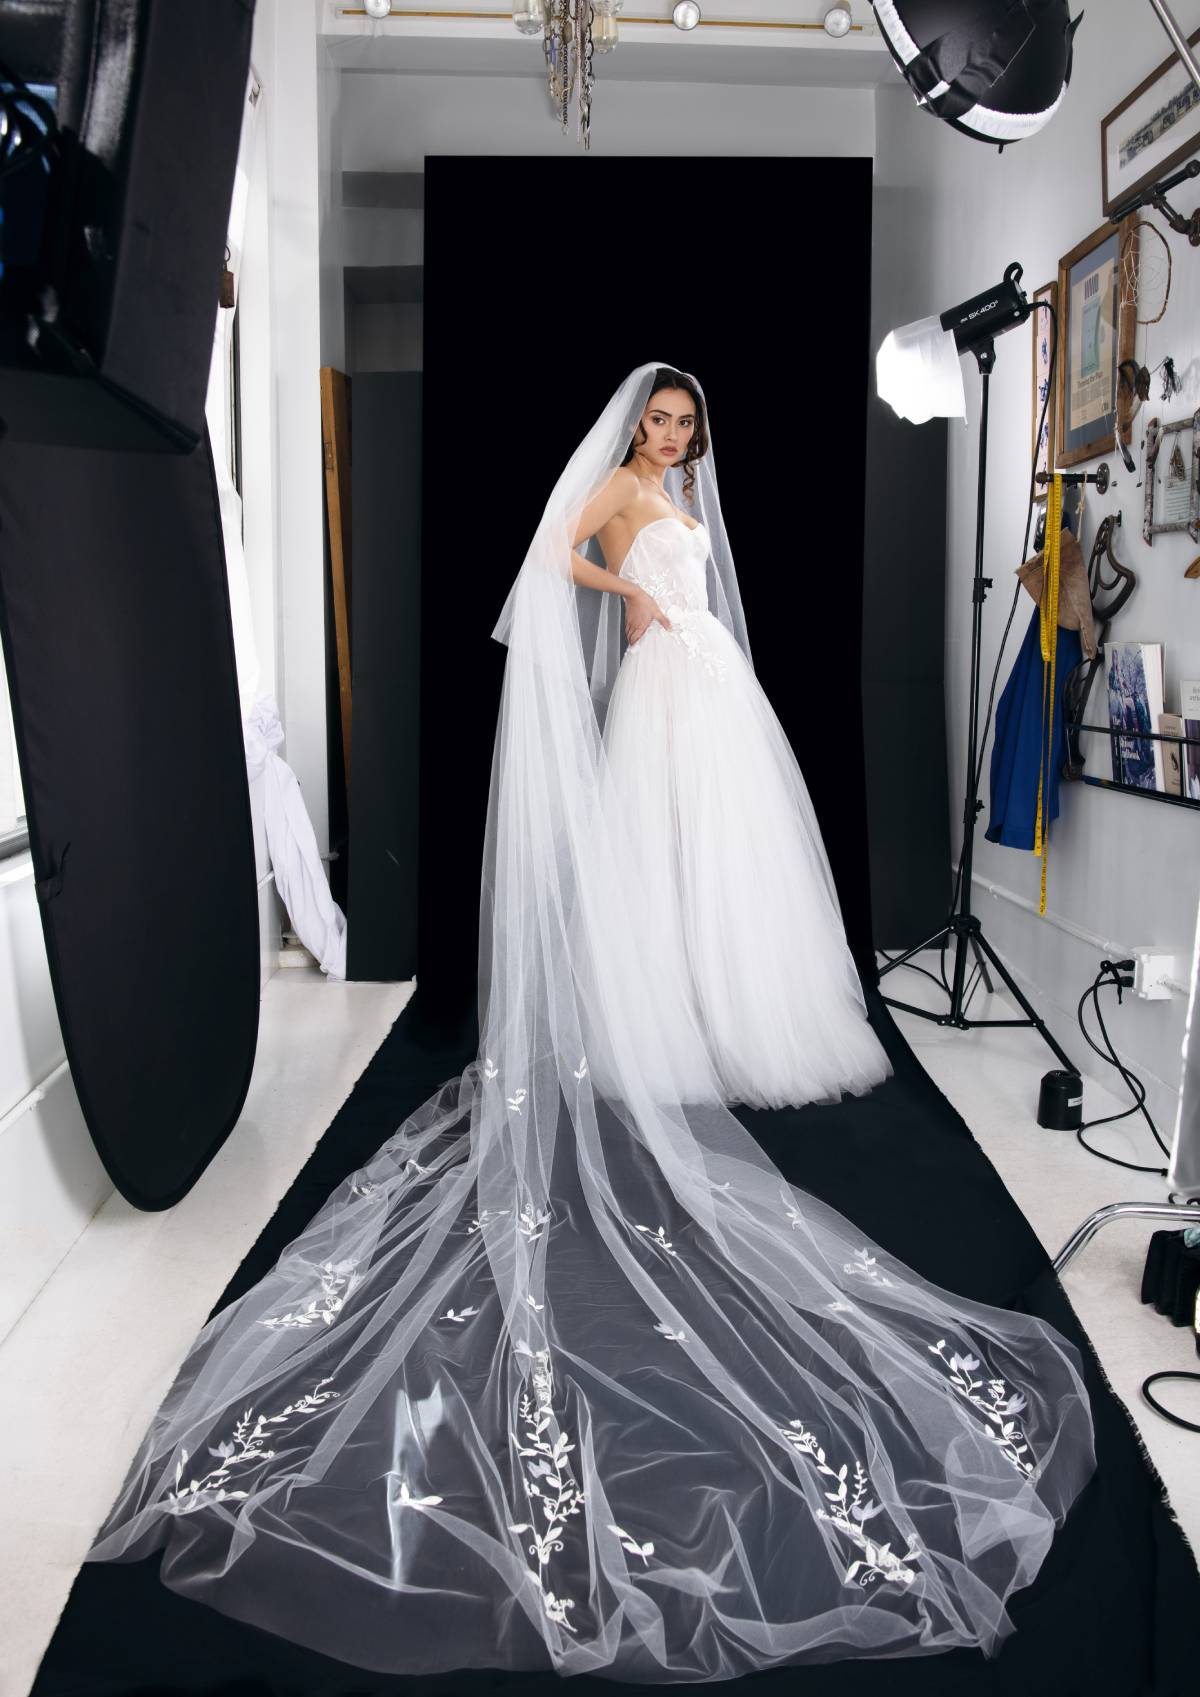 Bride Dress Model Primavera - Strapless bustier gown with appliques - Verdin New York